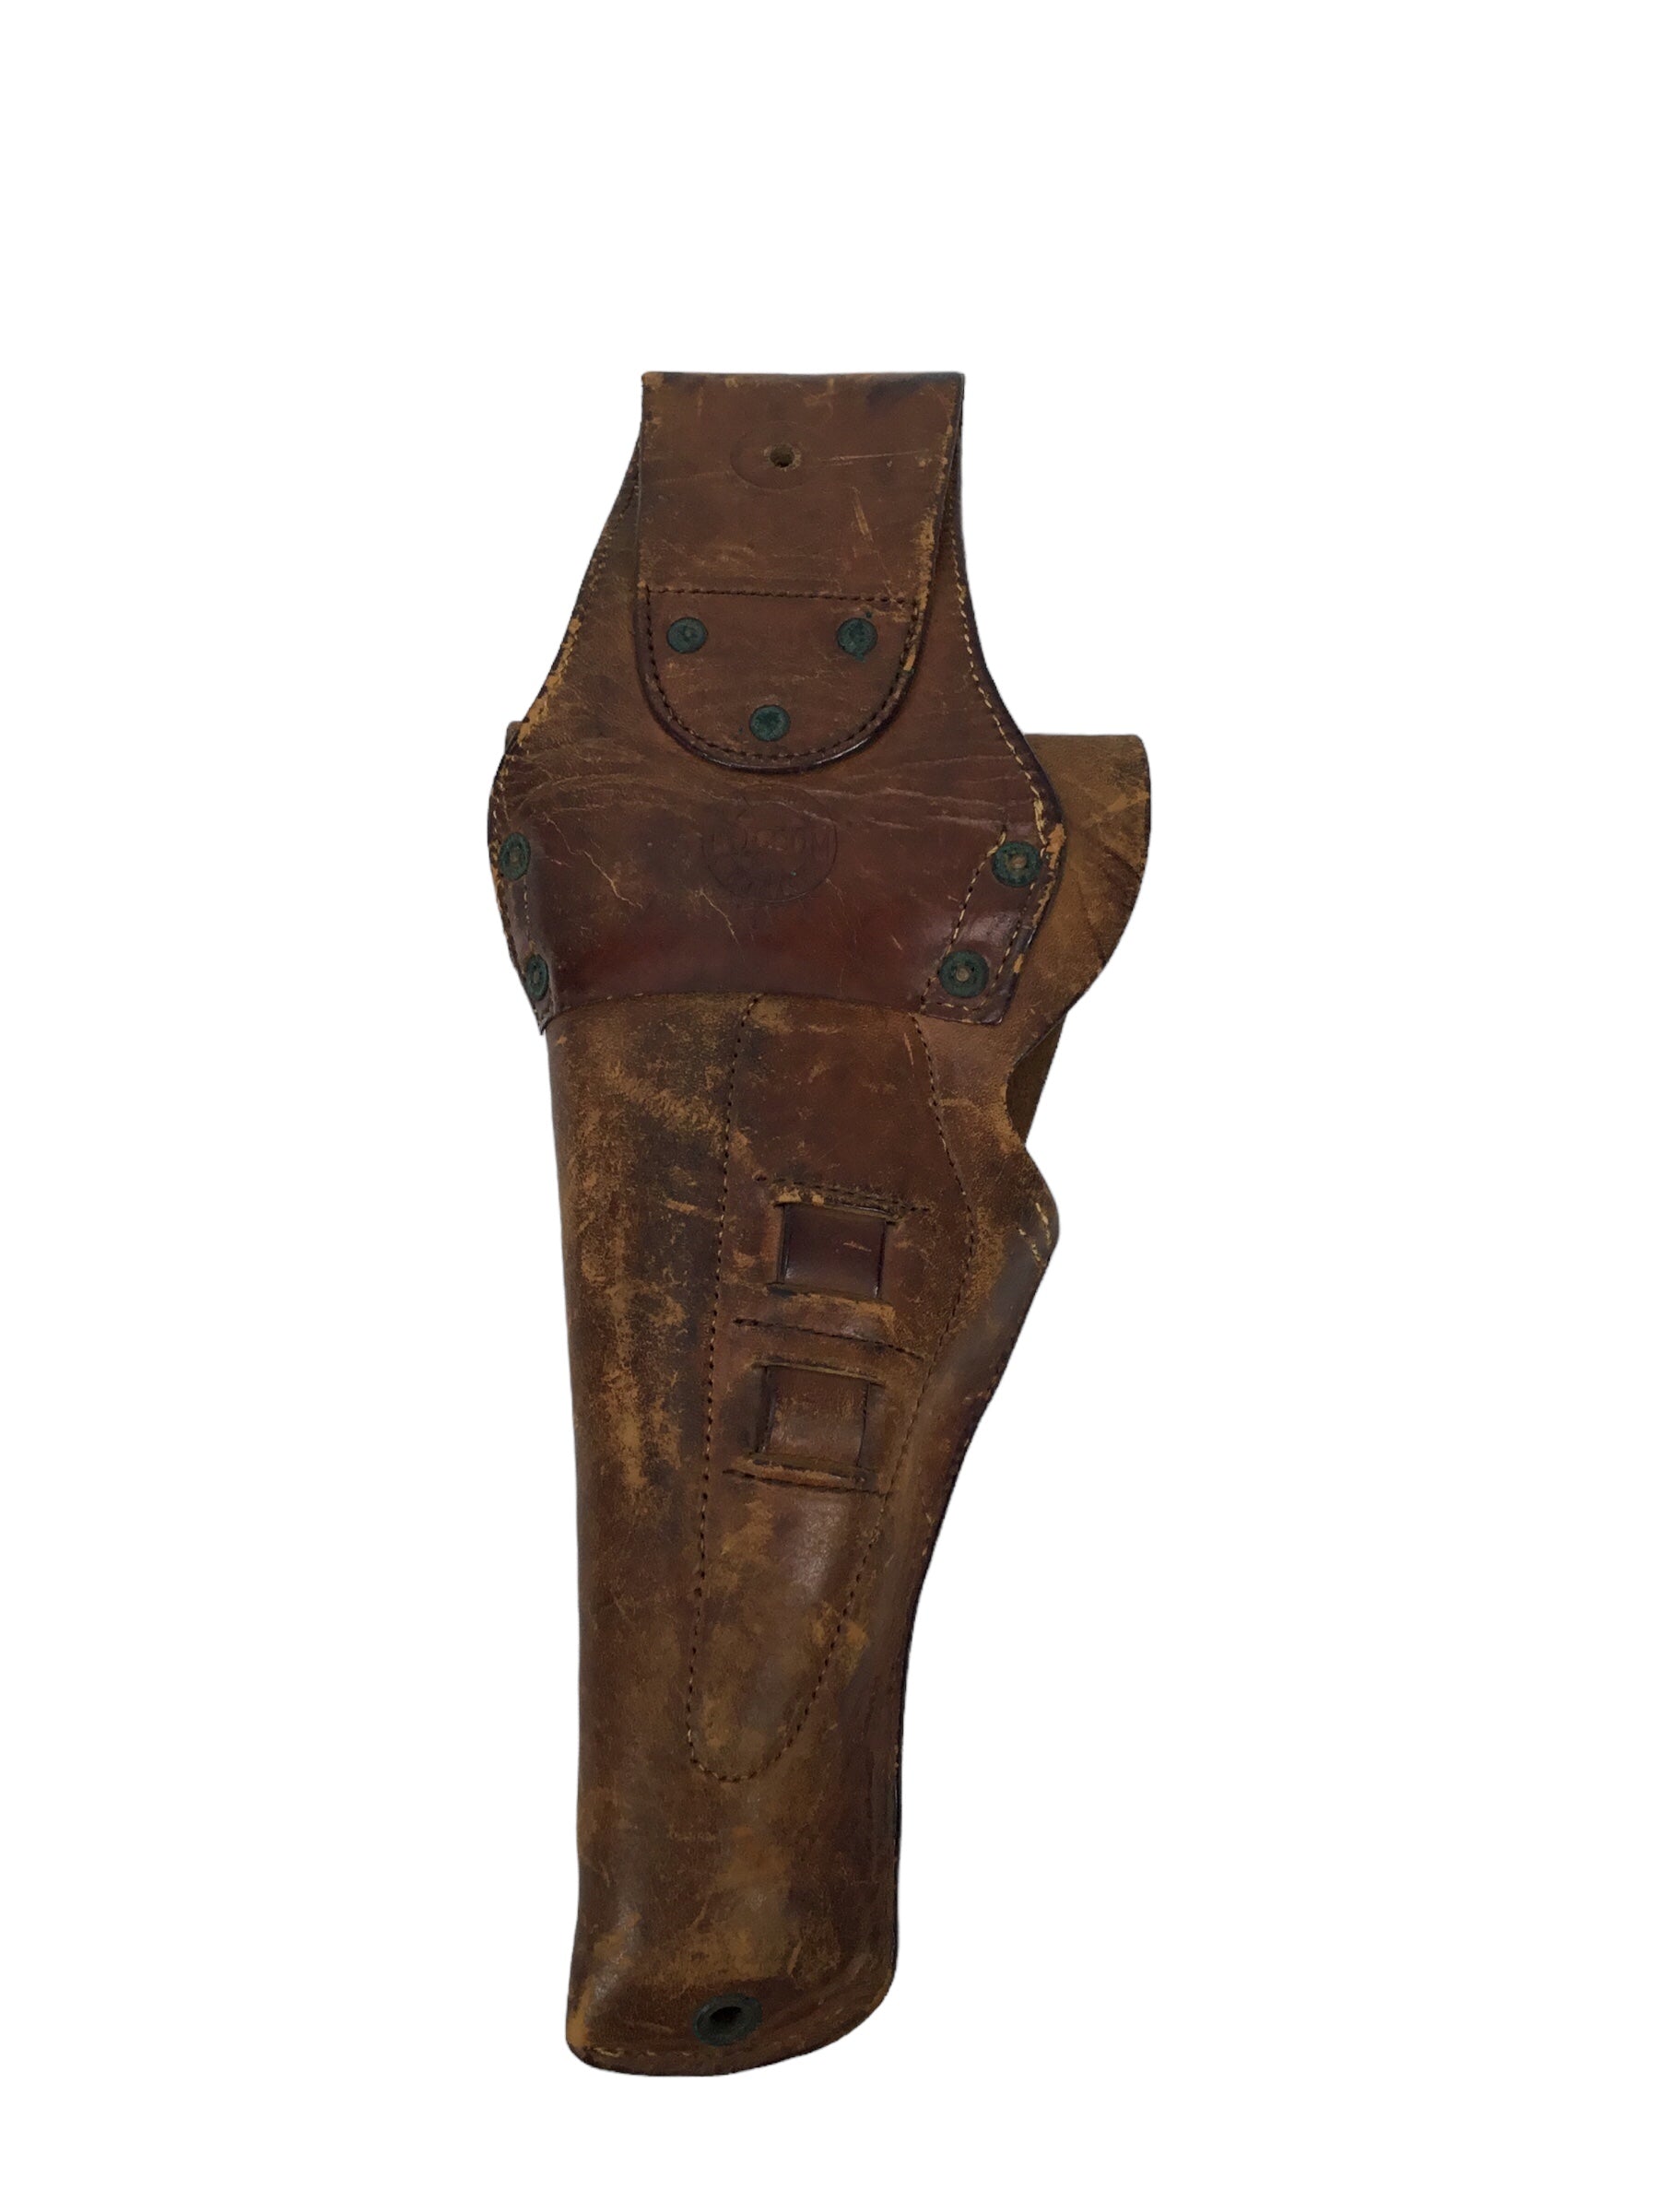 U.S. 1911 Leather Pistol Holster marked "Folsom Sporting Goods"